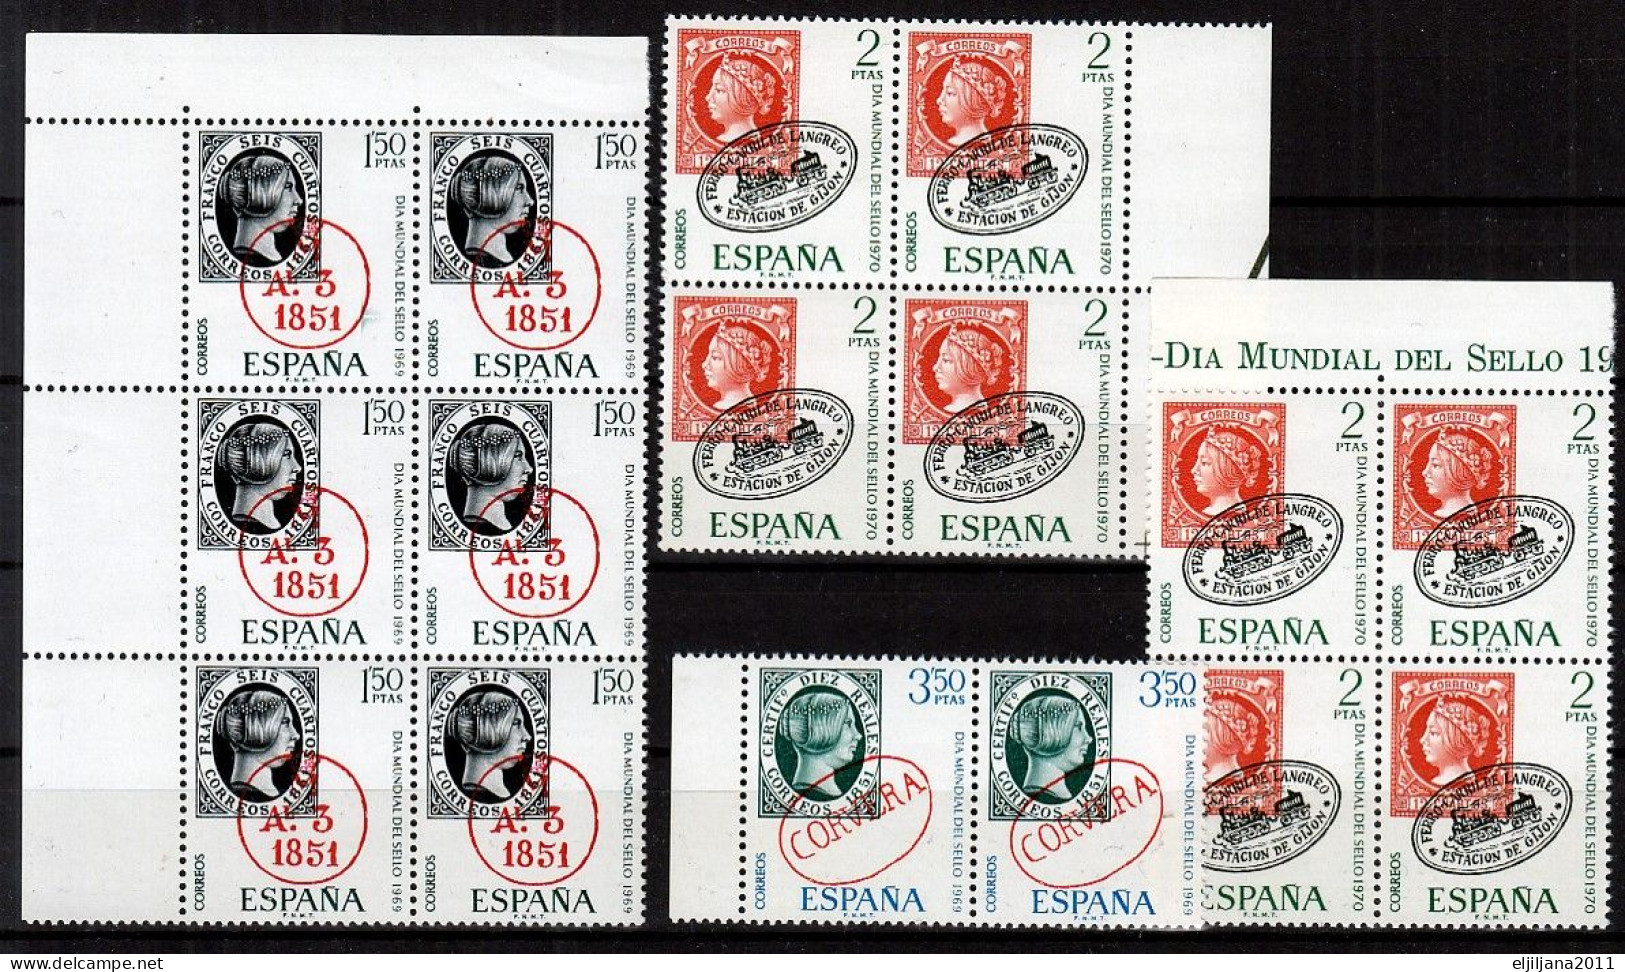 ⁕ SPAIN / ESPANA 1969 - 1970 ⁕ World Stamp Day Mi.1809/10 & Mi.1861 ⁕ 16v MNH - Ungebraucht